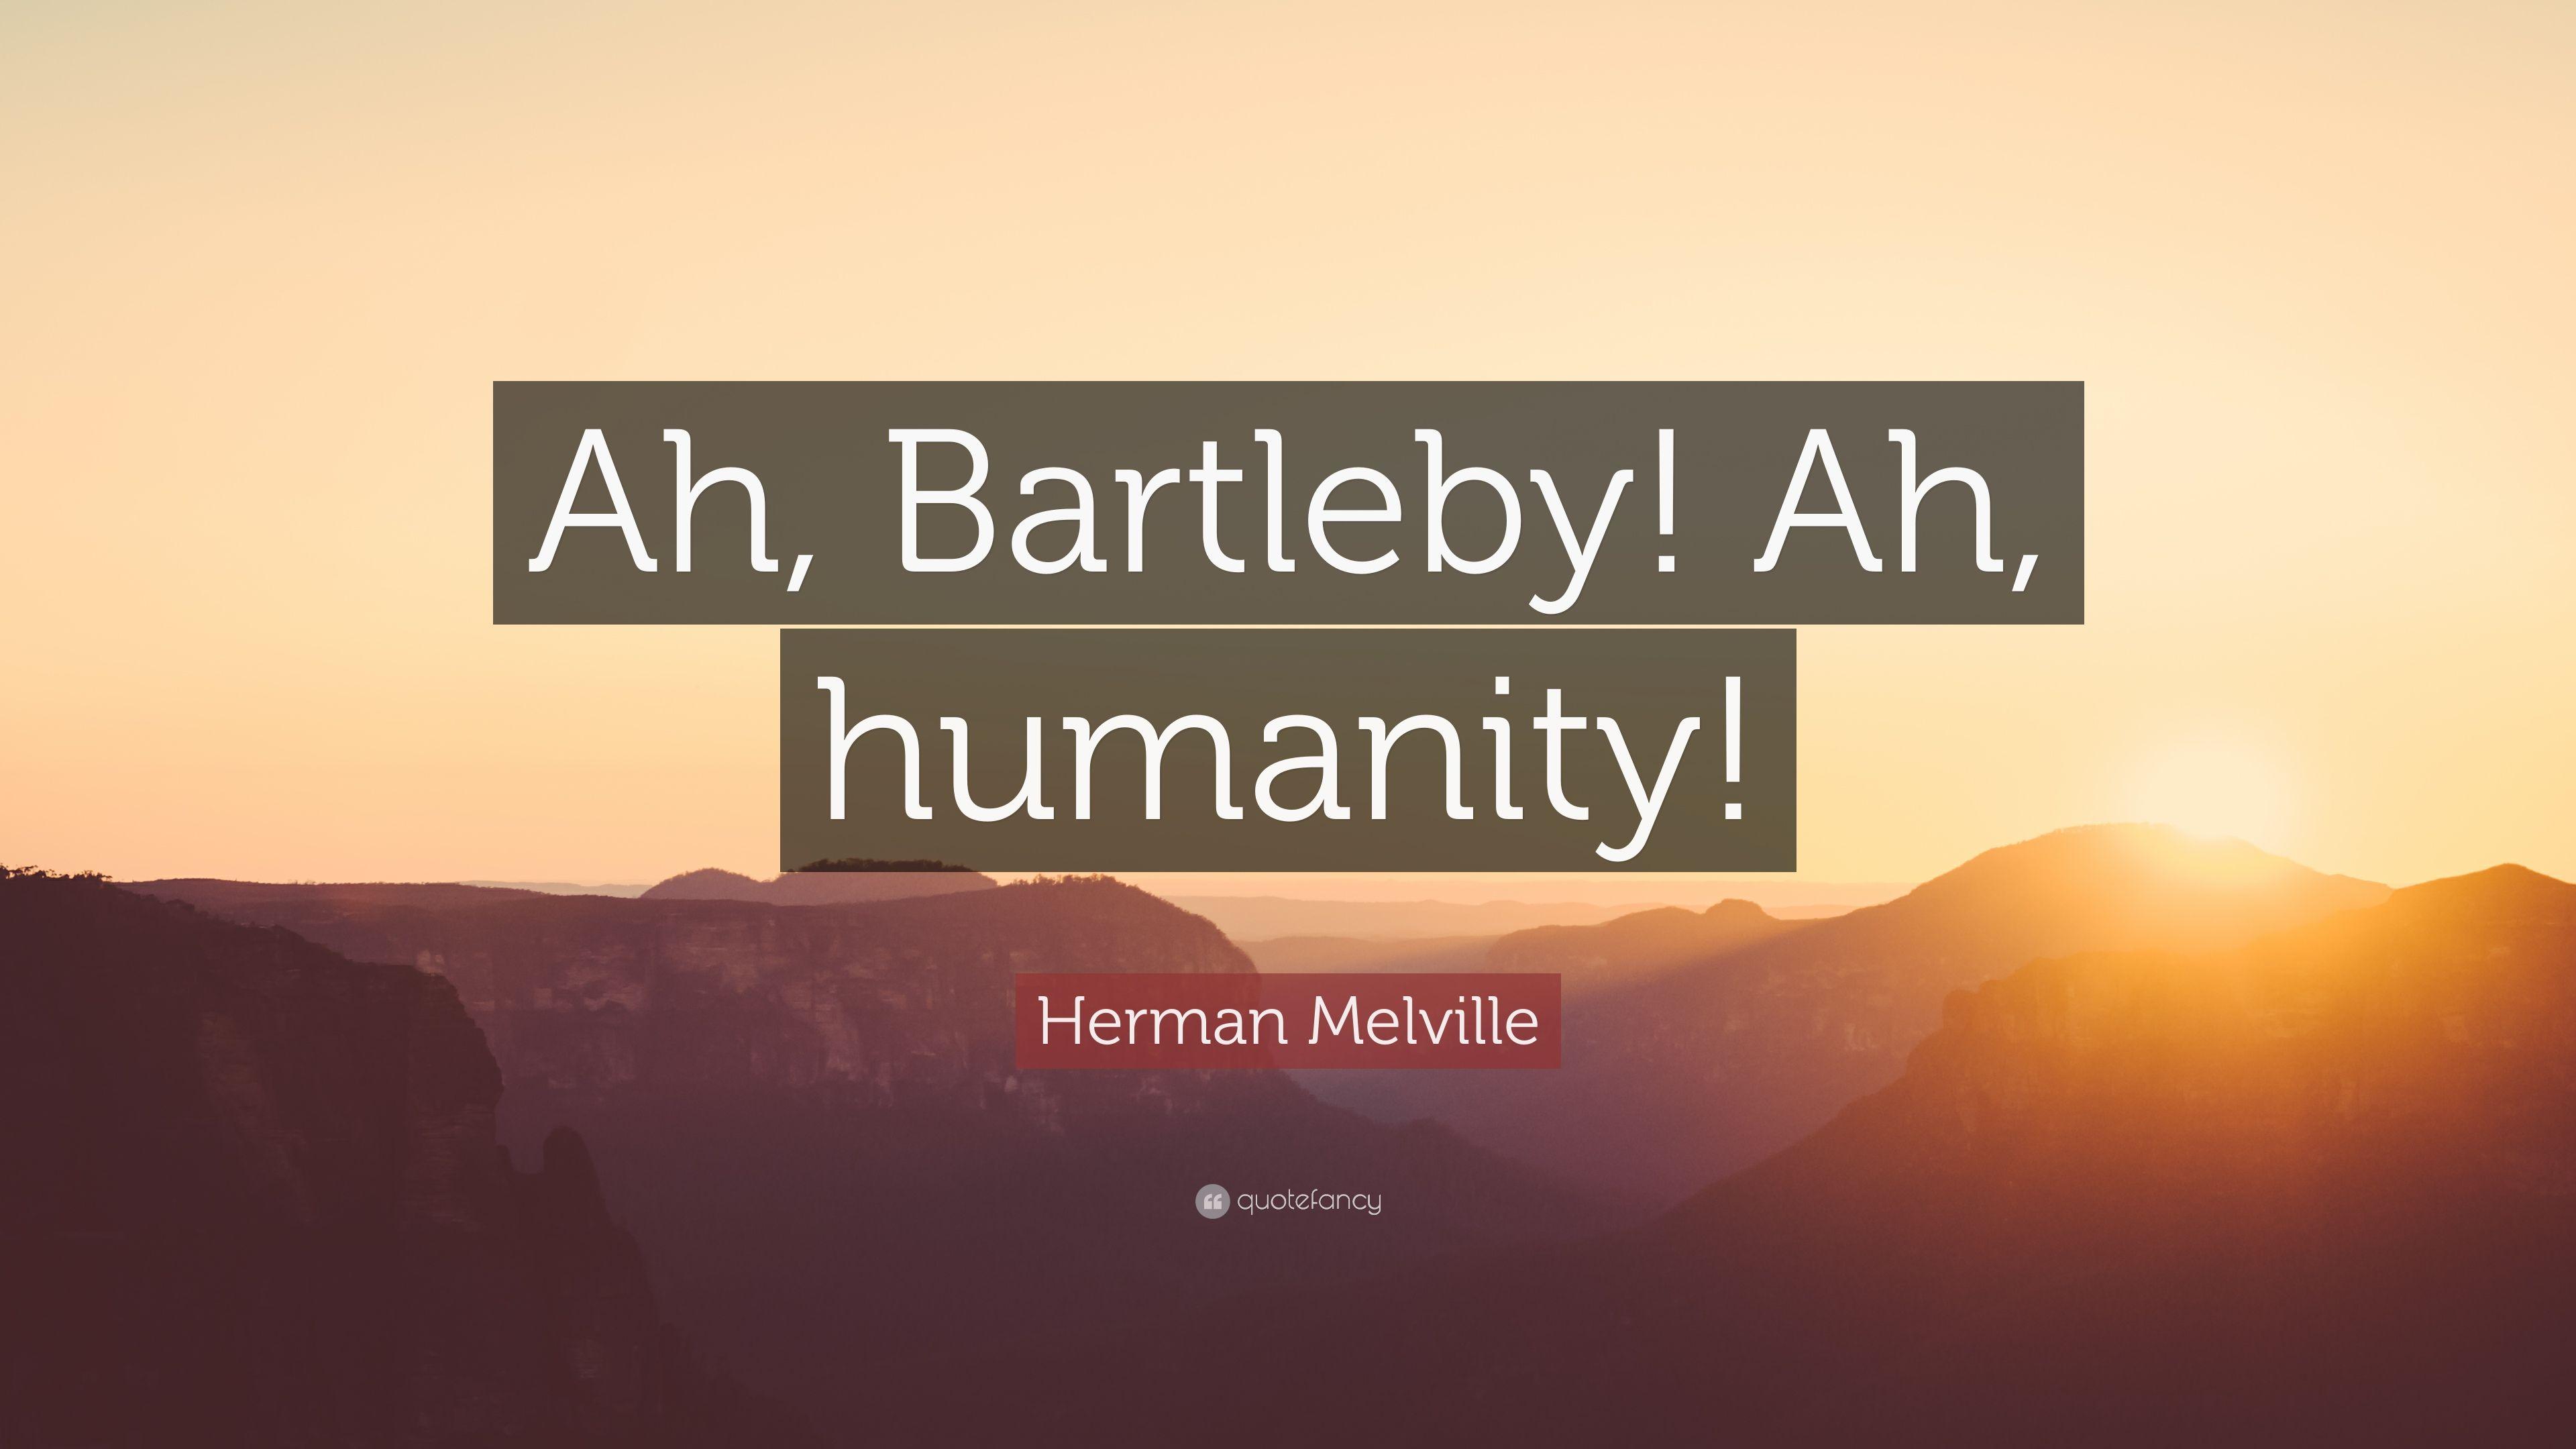 Herman Melville Quote: “Ah, Bartleby! Ah, humanity!” 10